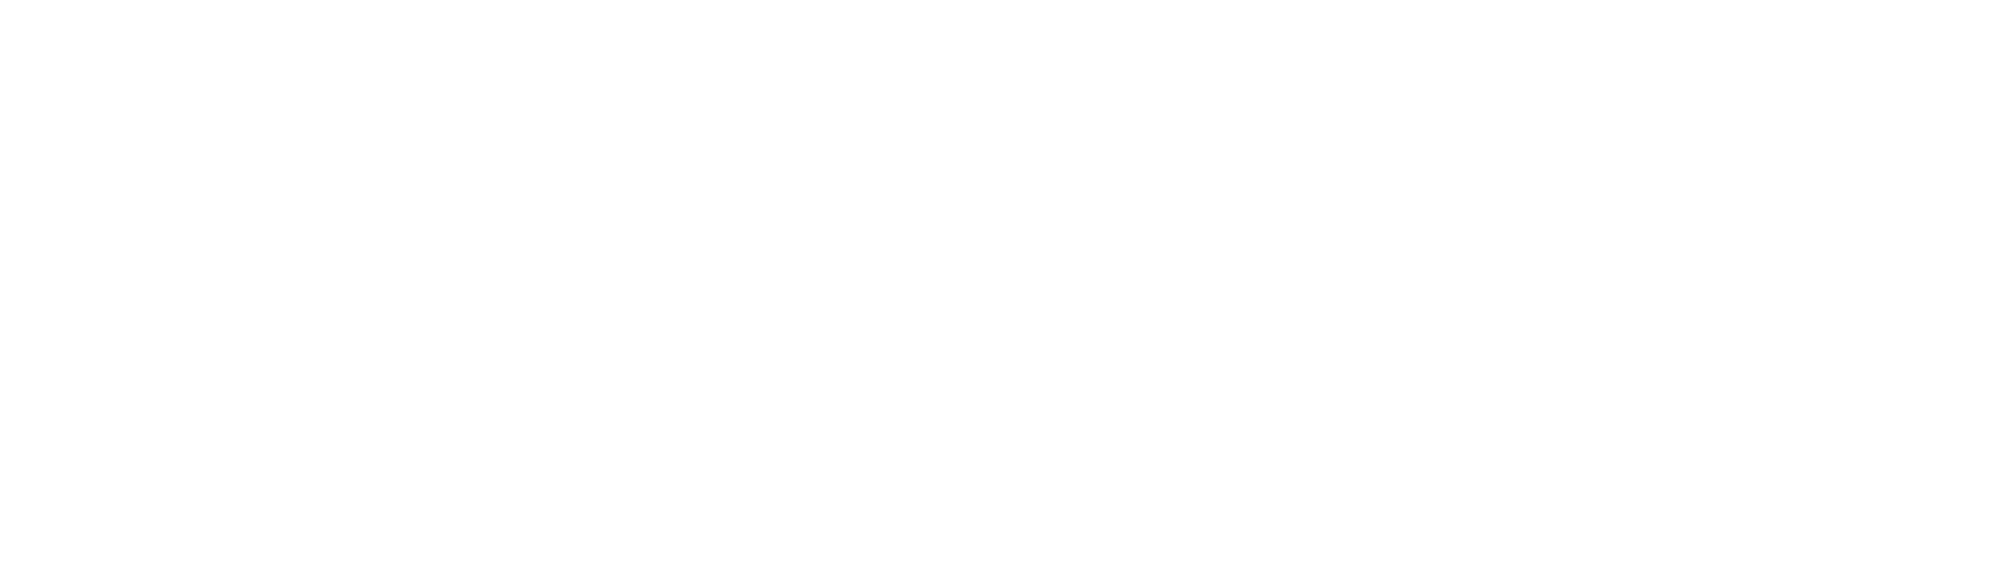 Furry Vengeance logo